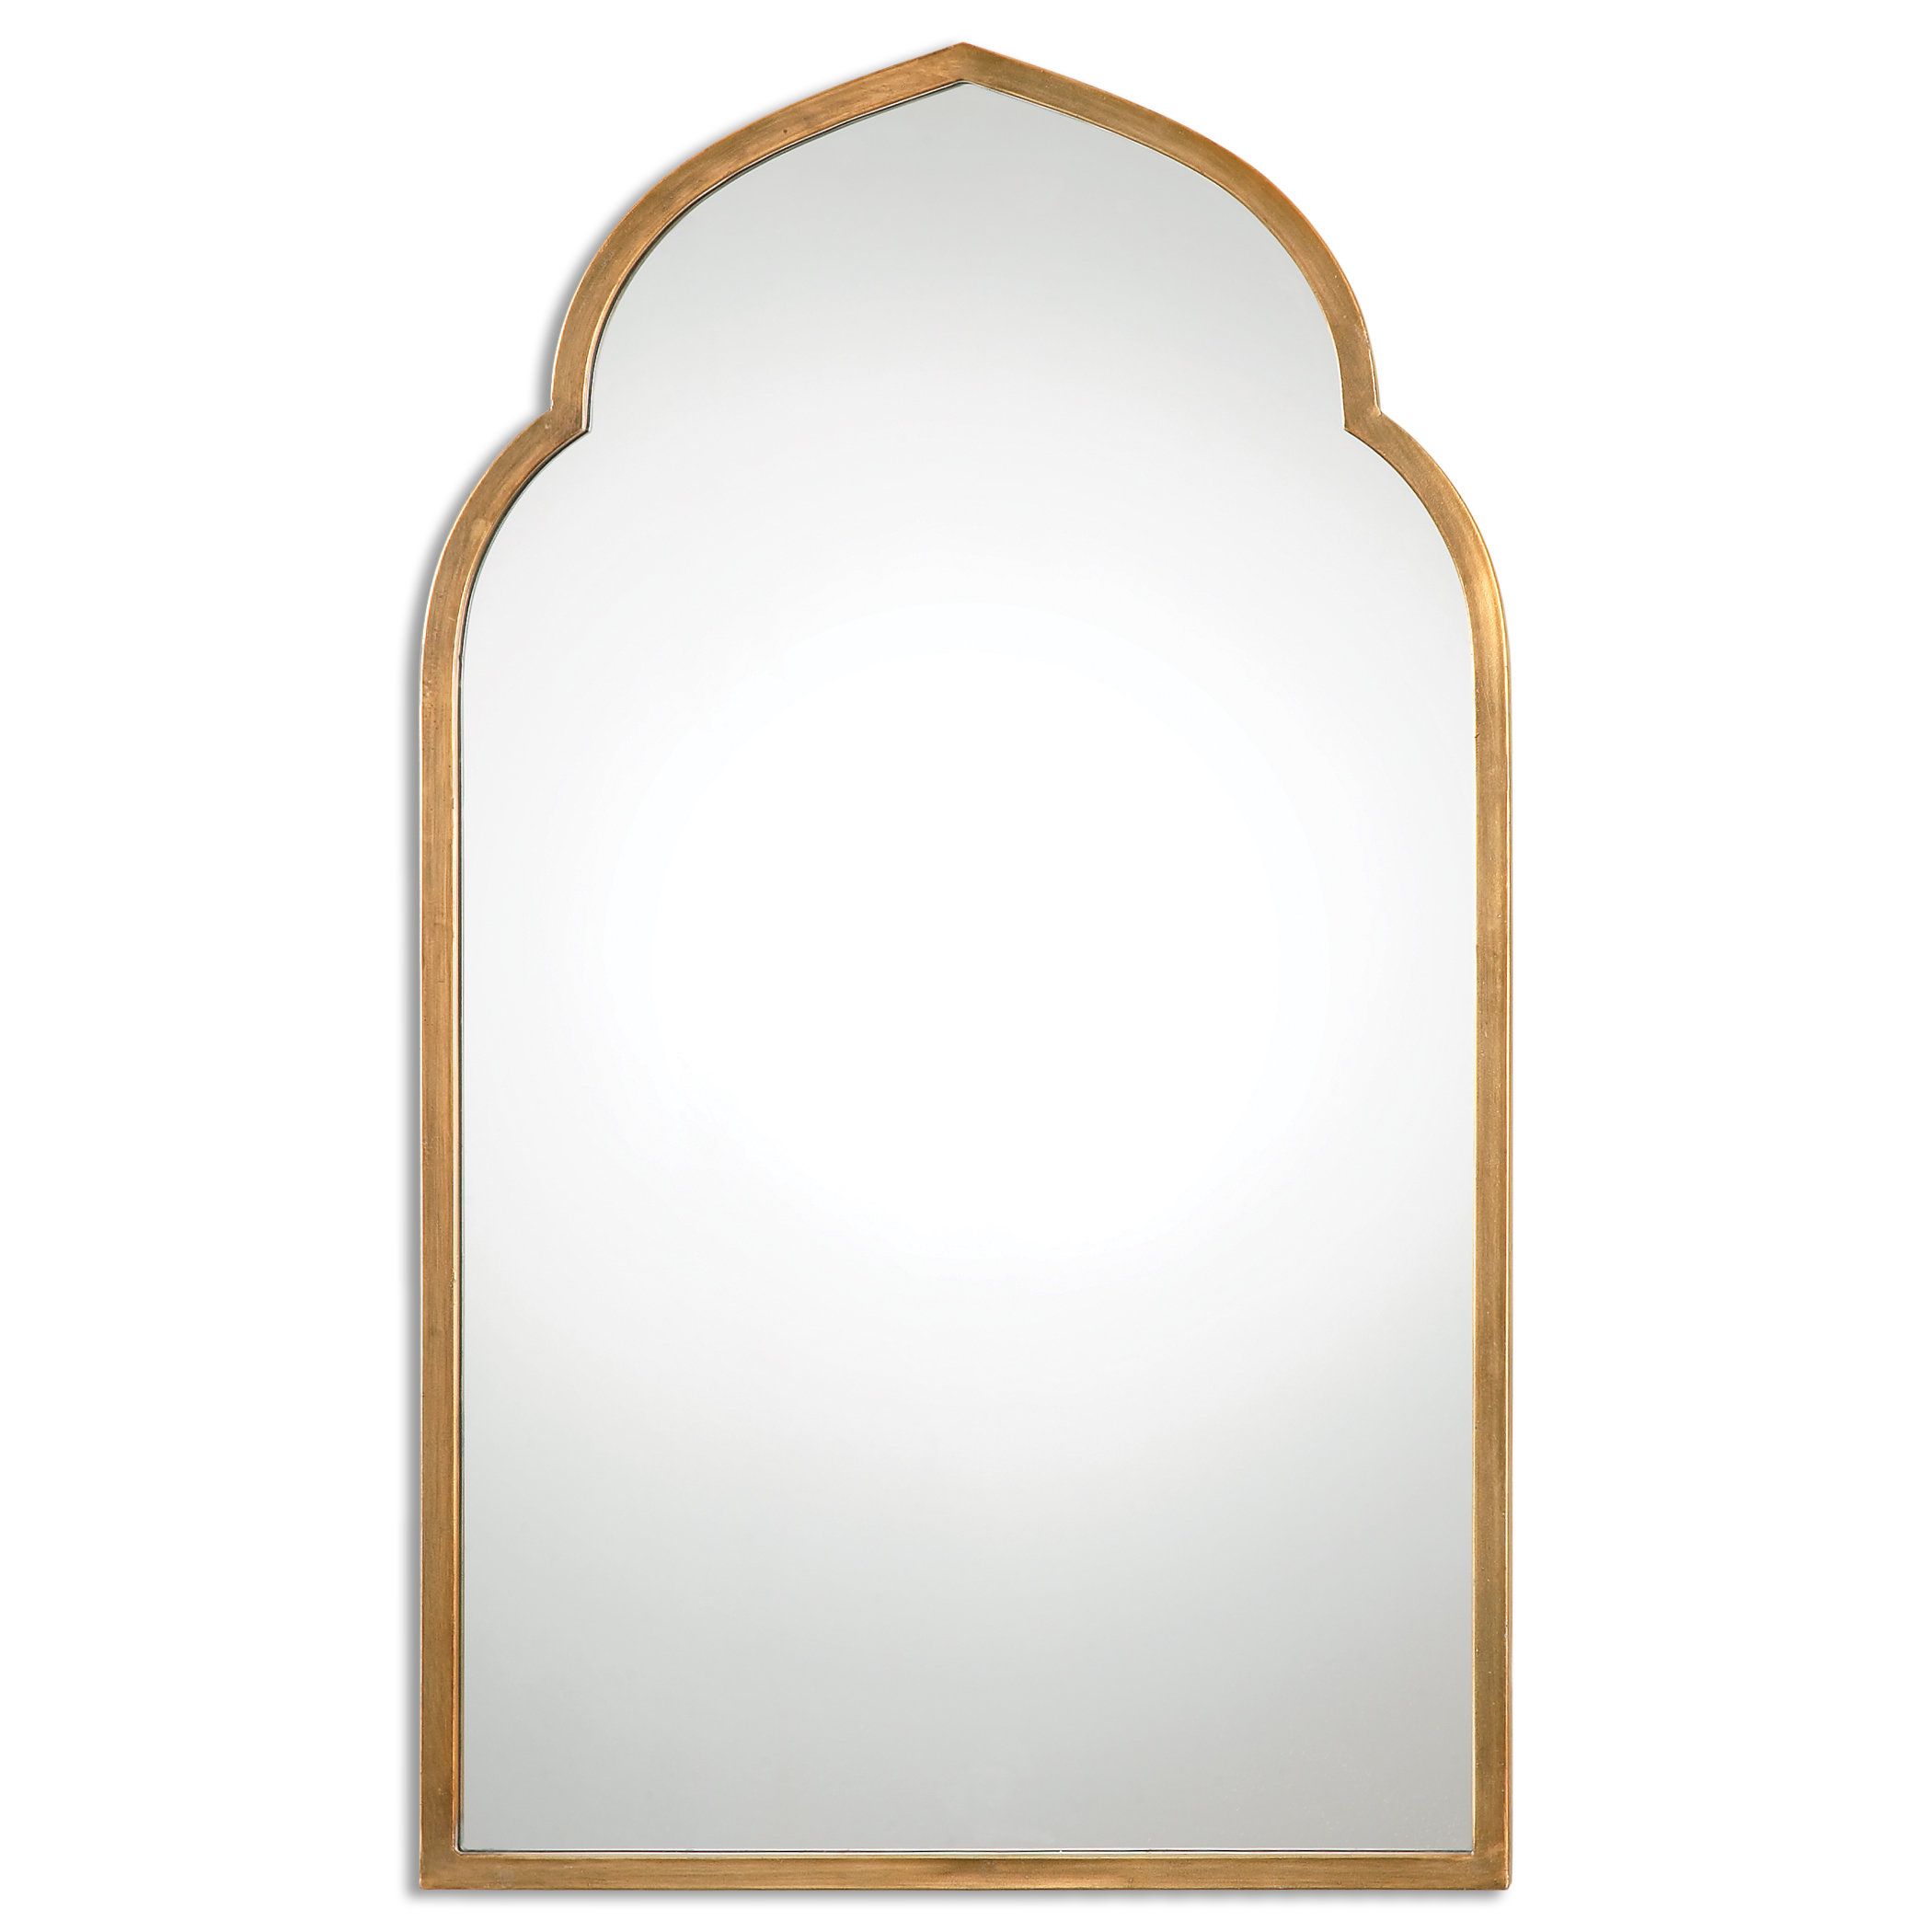 Gold Arch Wall Mirror & Reviews | Joss & Main Regarding Fifi Contemporary Arch Wall Mirrors (View 10 of 30)